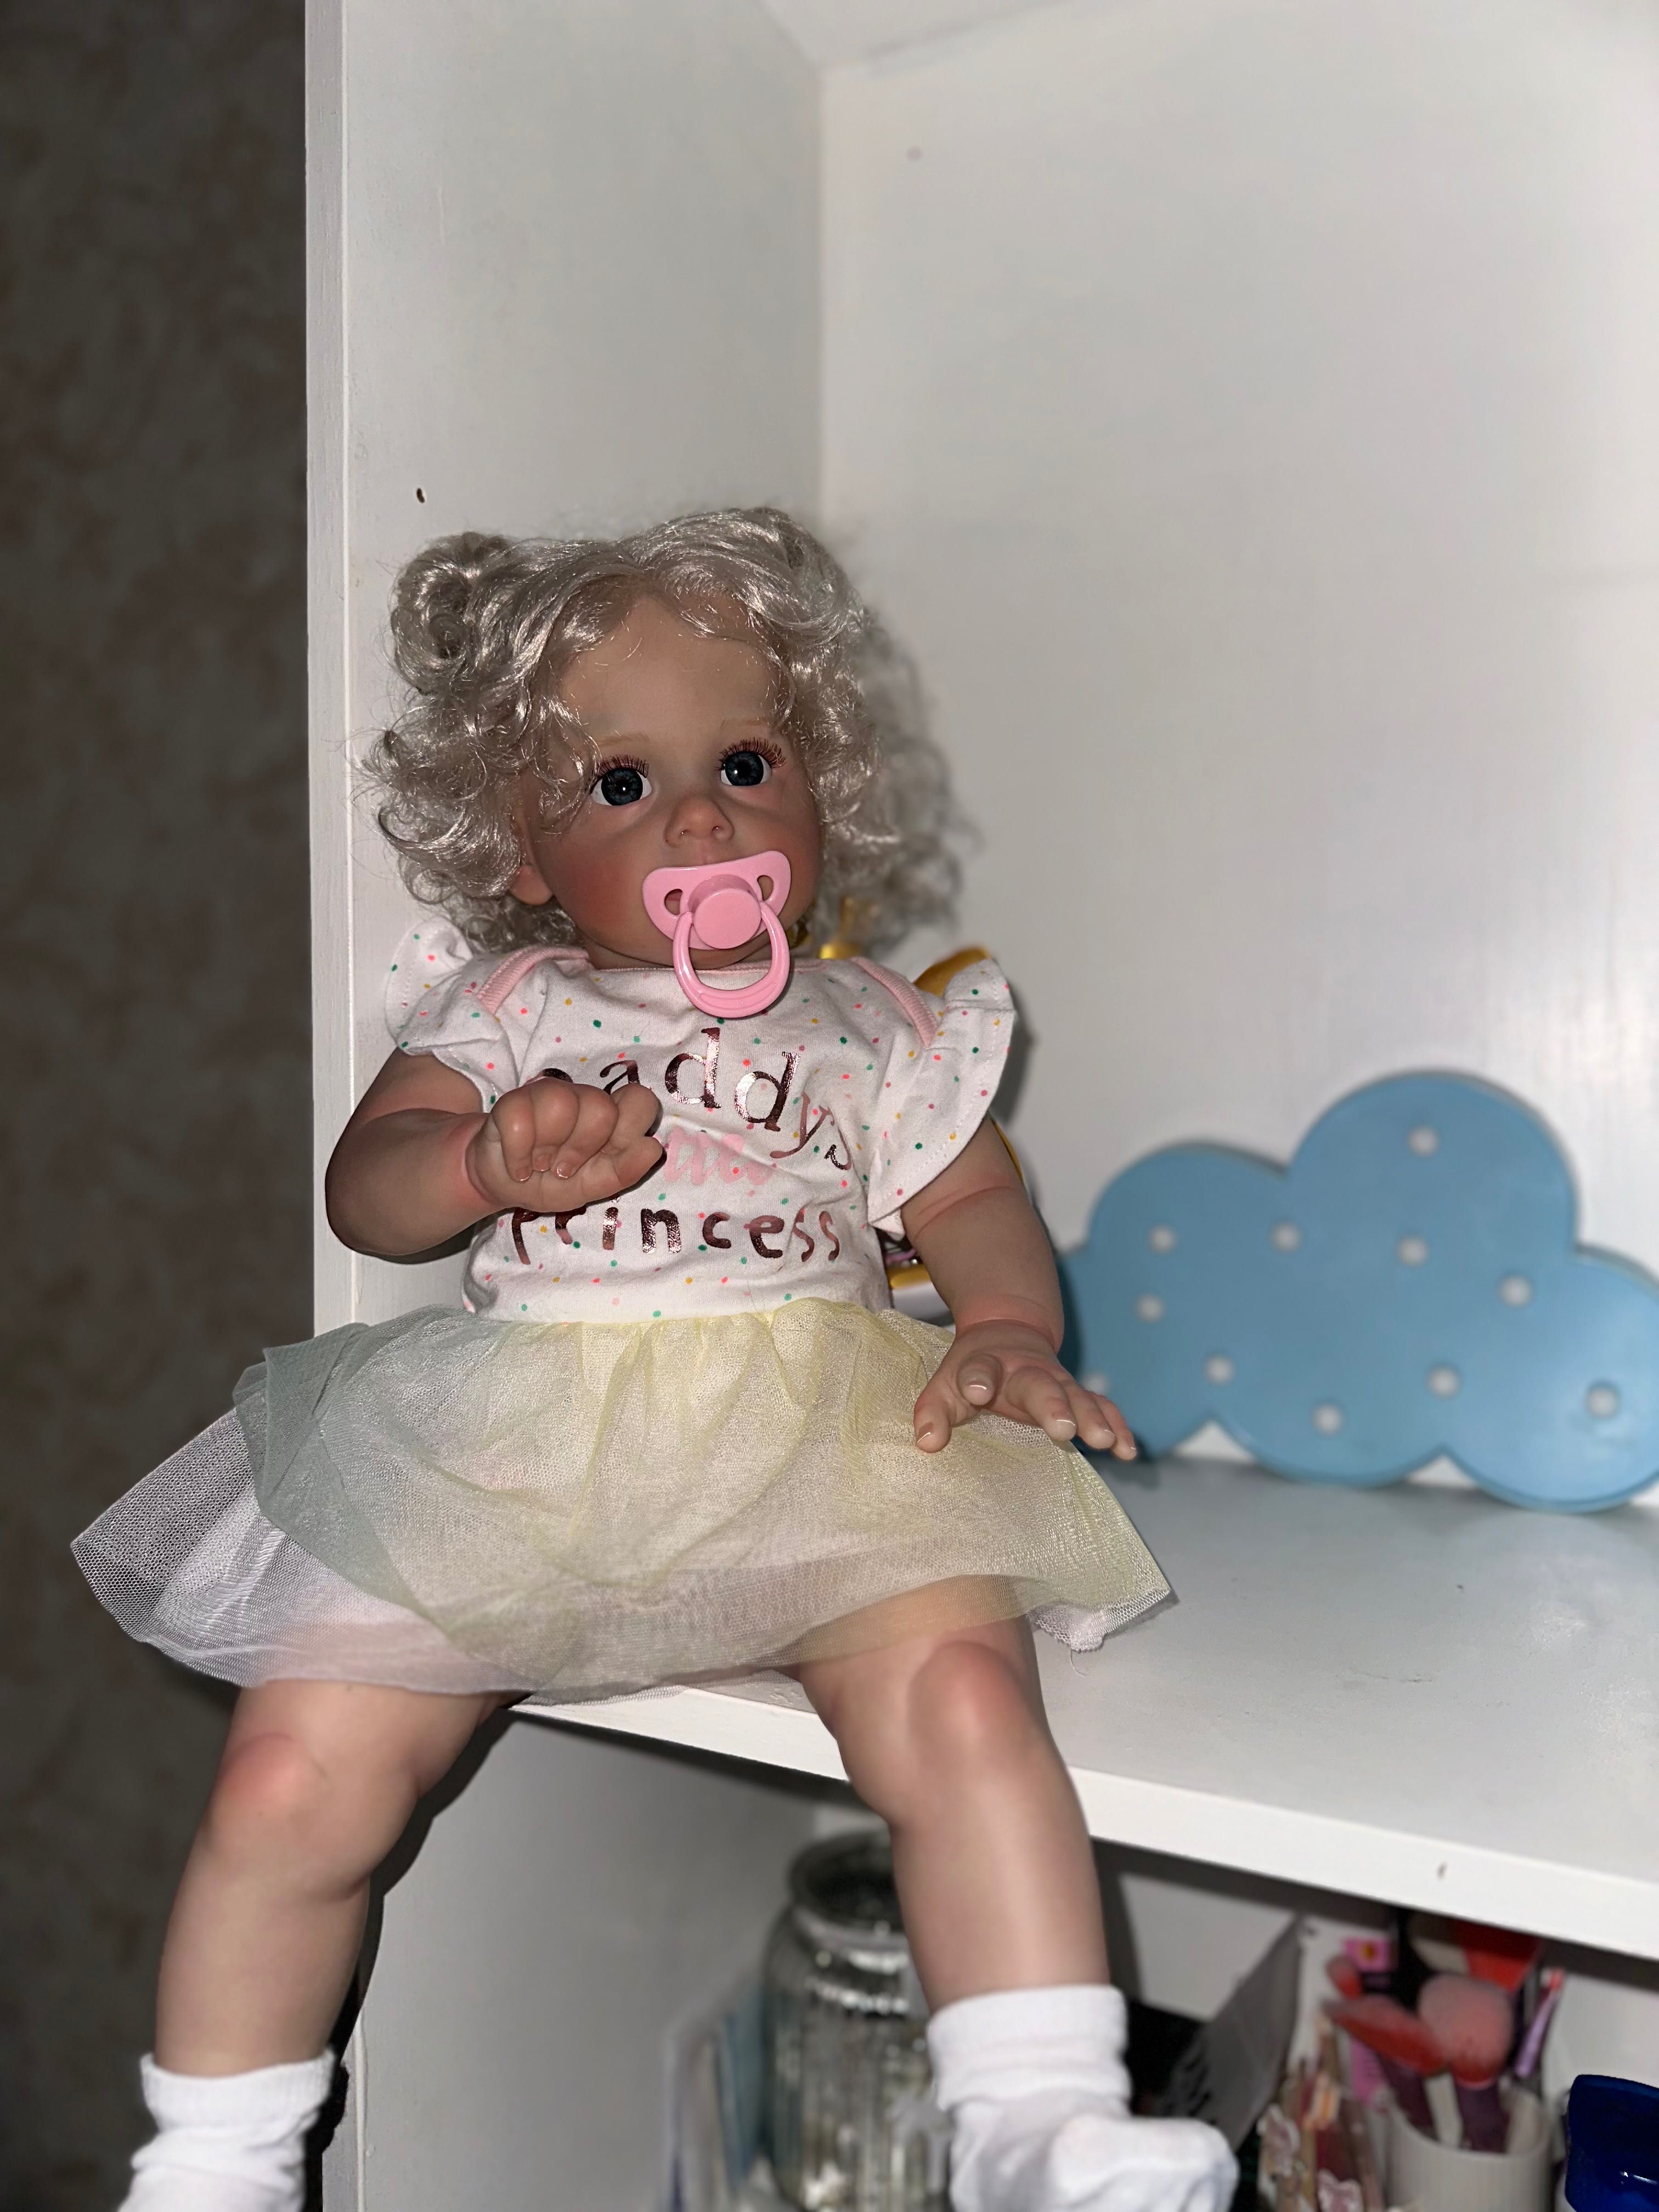 Продам кукла Мегги реборн реалистичная